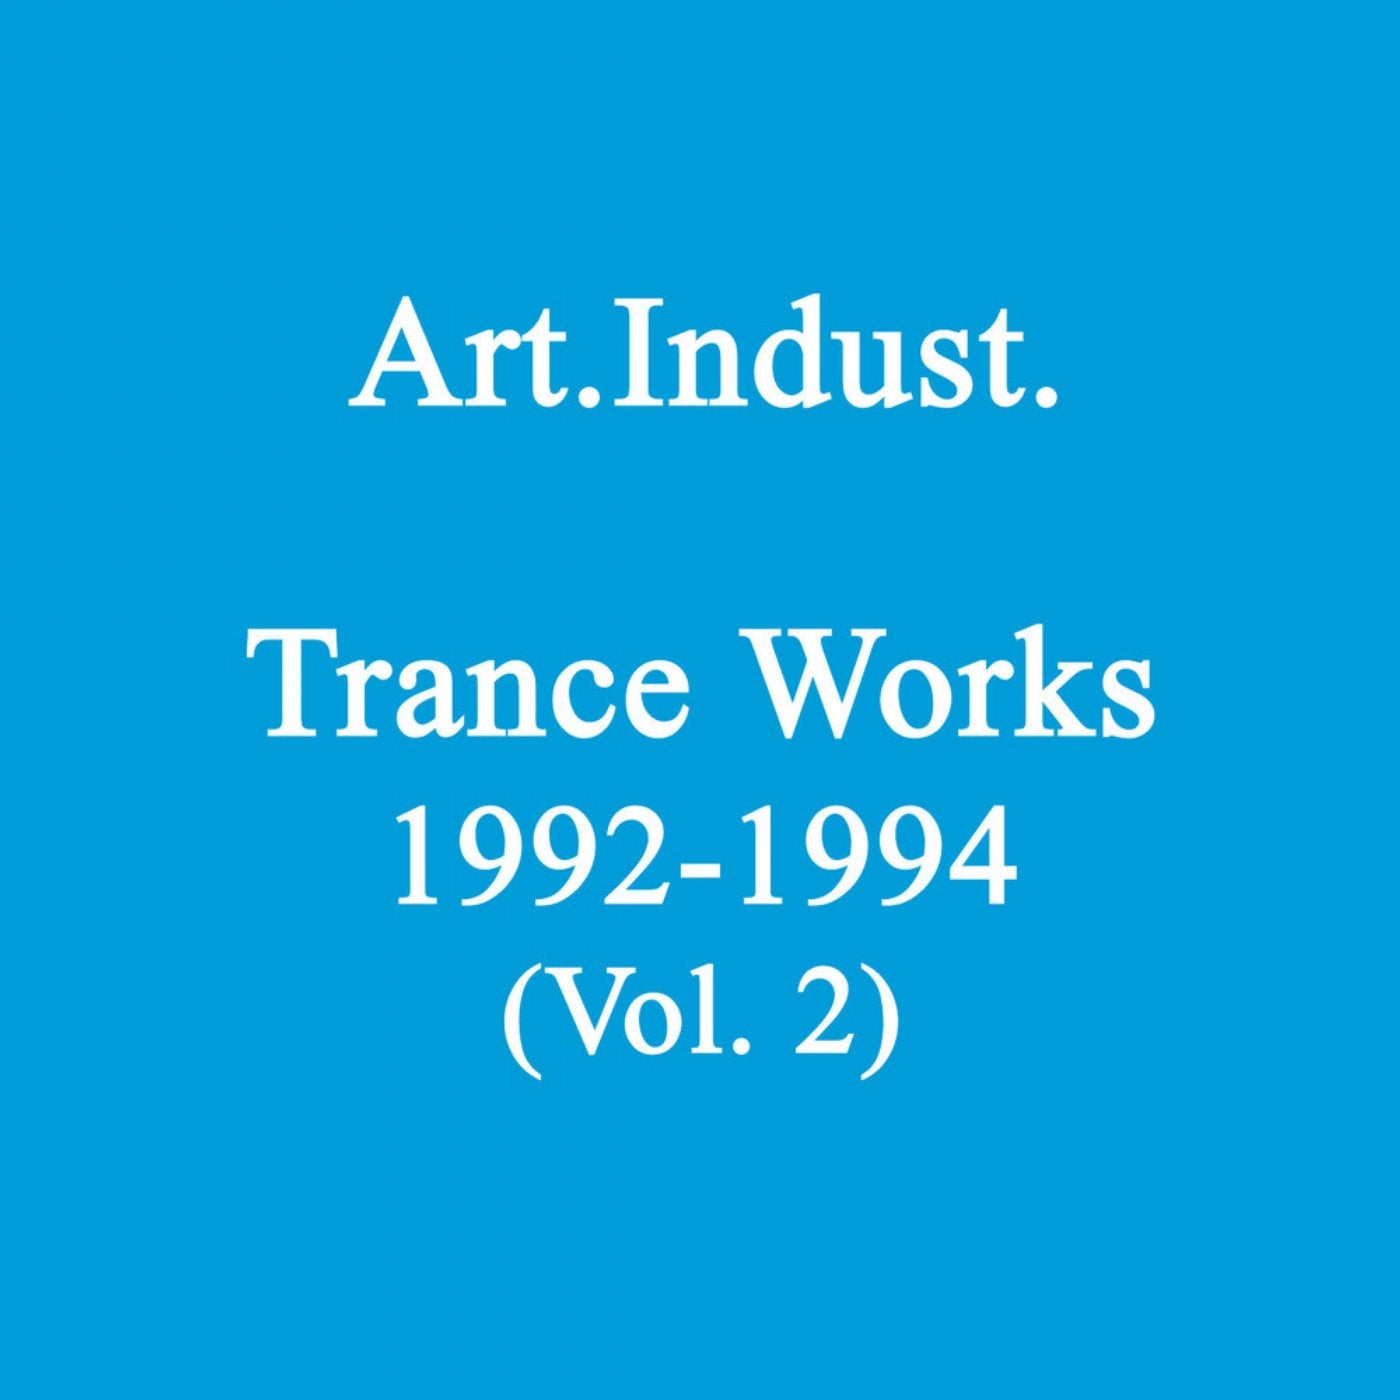 Trance Works 1992-1994, Vol. 2